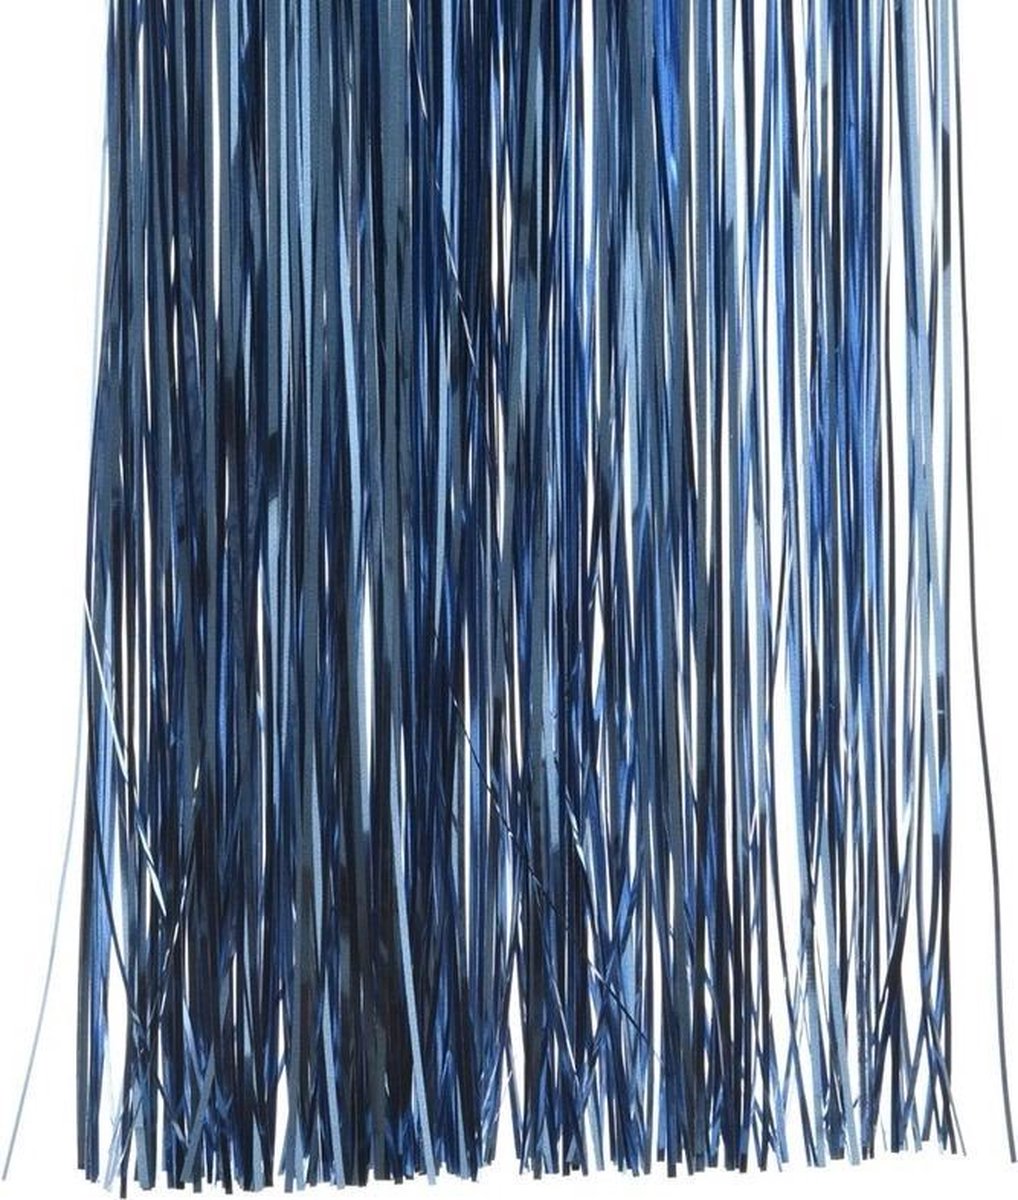 4x Blauwe kerstversiering folie slierten 50 cm - Tinsel kerstboom slinger 50 x 40 cm 4 stuks